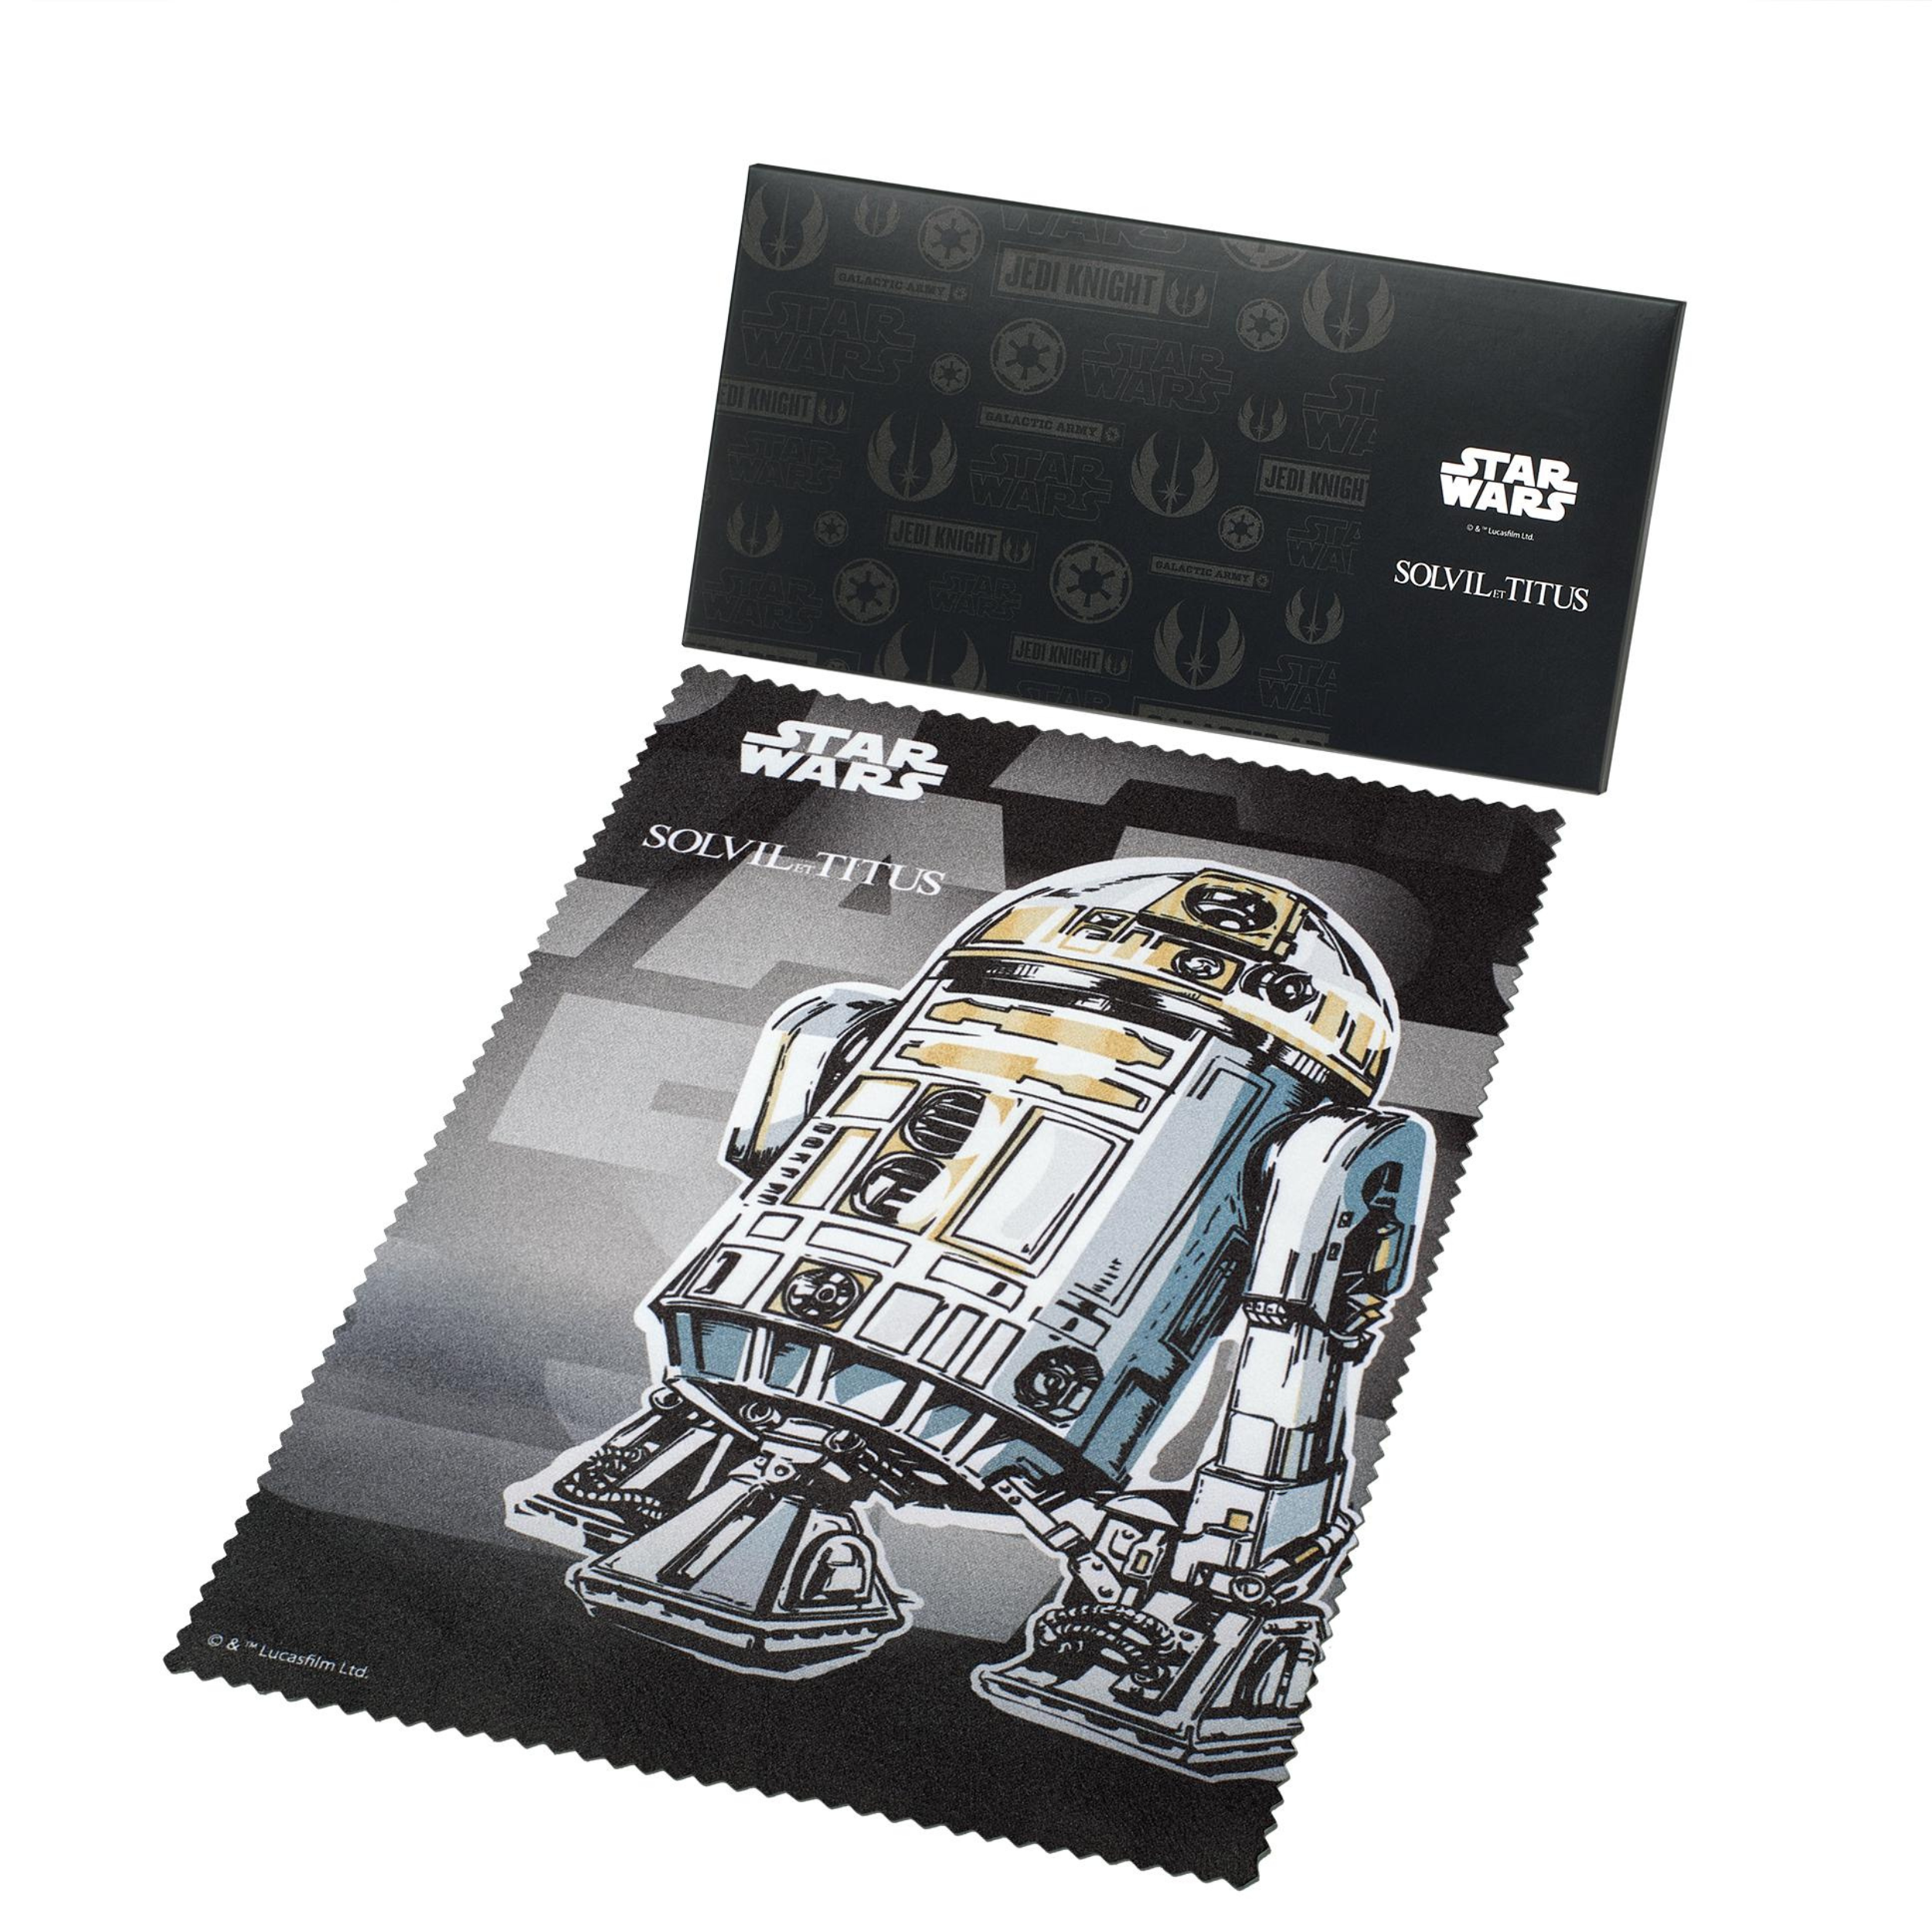 [Pre-Order] Solvil et Titus x Star Wars Limited Edition Saber R2-D2 Chronograph Watch W06-03365-001